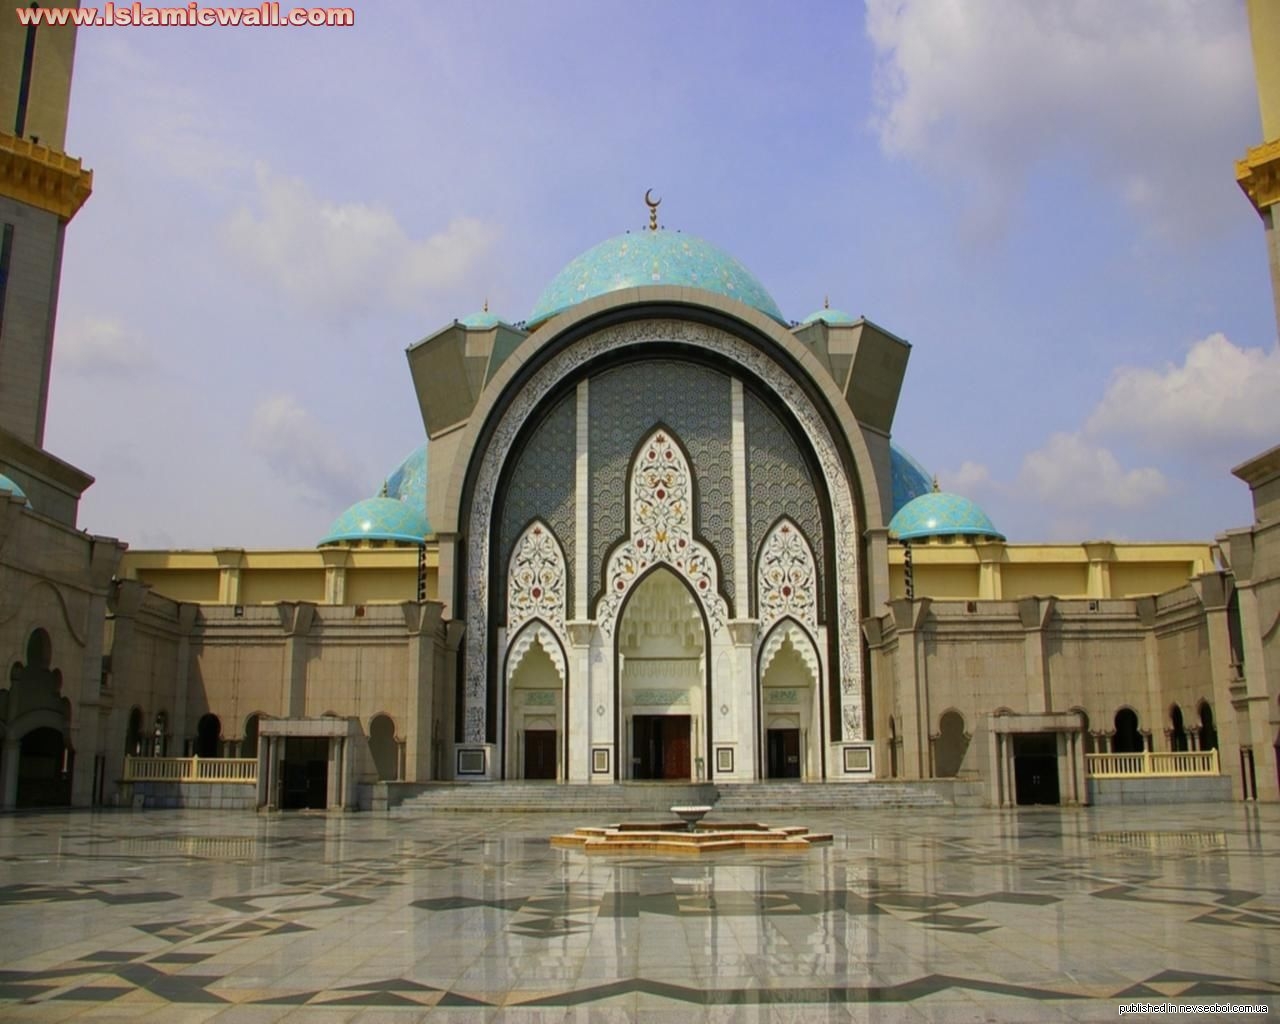 Мусульманский часть. Мечети арабского халифата. Мечеть Вилайят-Персекутуан, Куала-Лумпур, Малайзия. Исламская архитектура мечеть. Мечеть Вилайят Персекутуан.